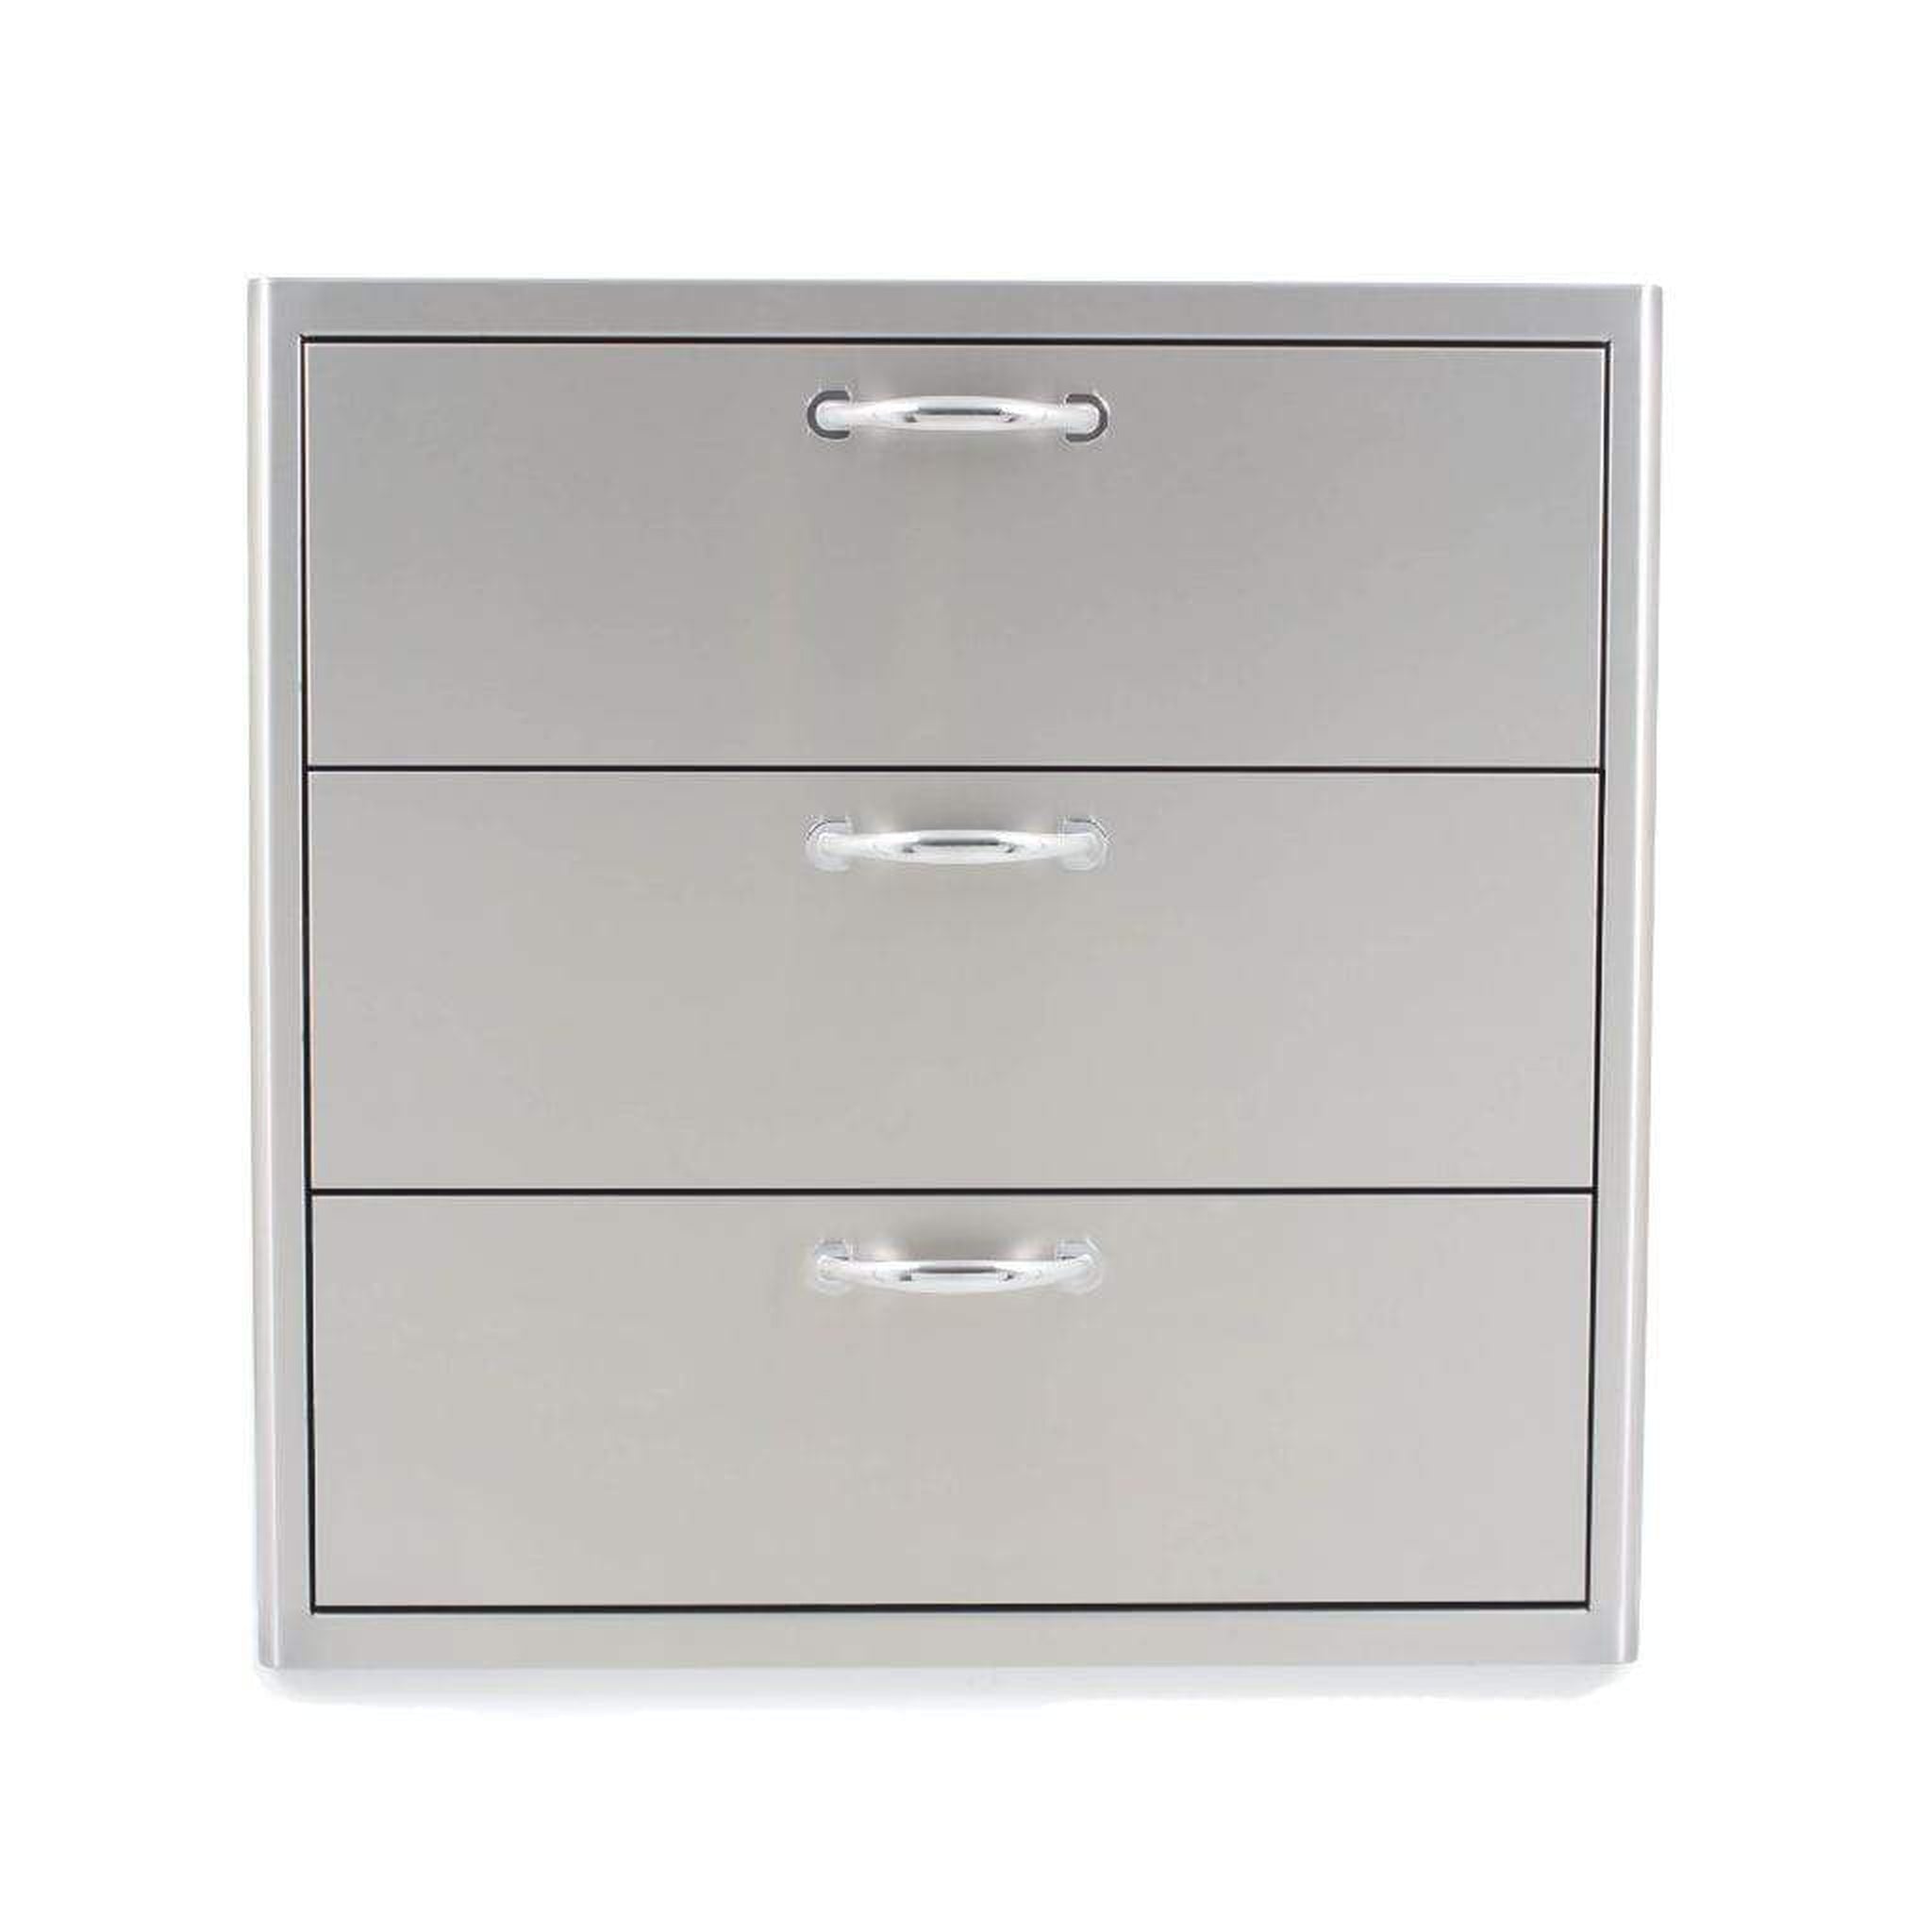 blaze-30-stainless-steel-triple-access-drawer 1